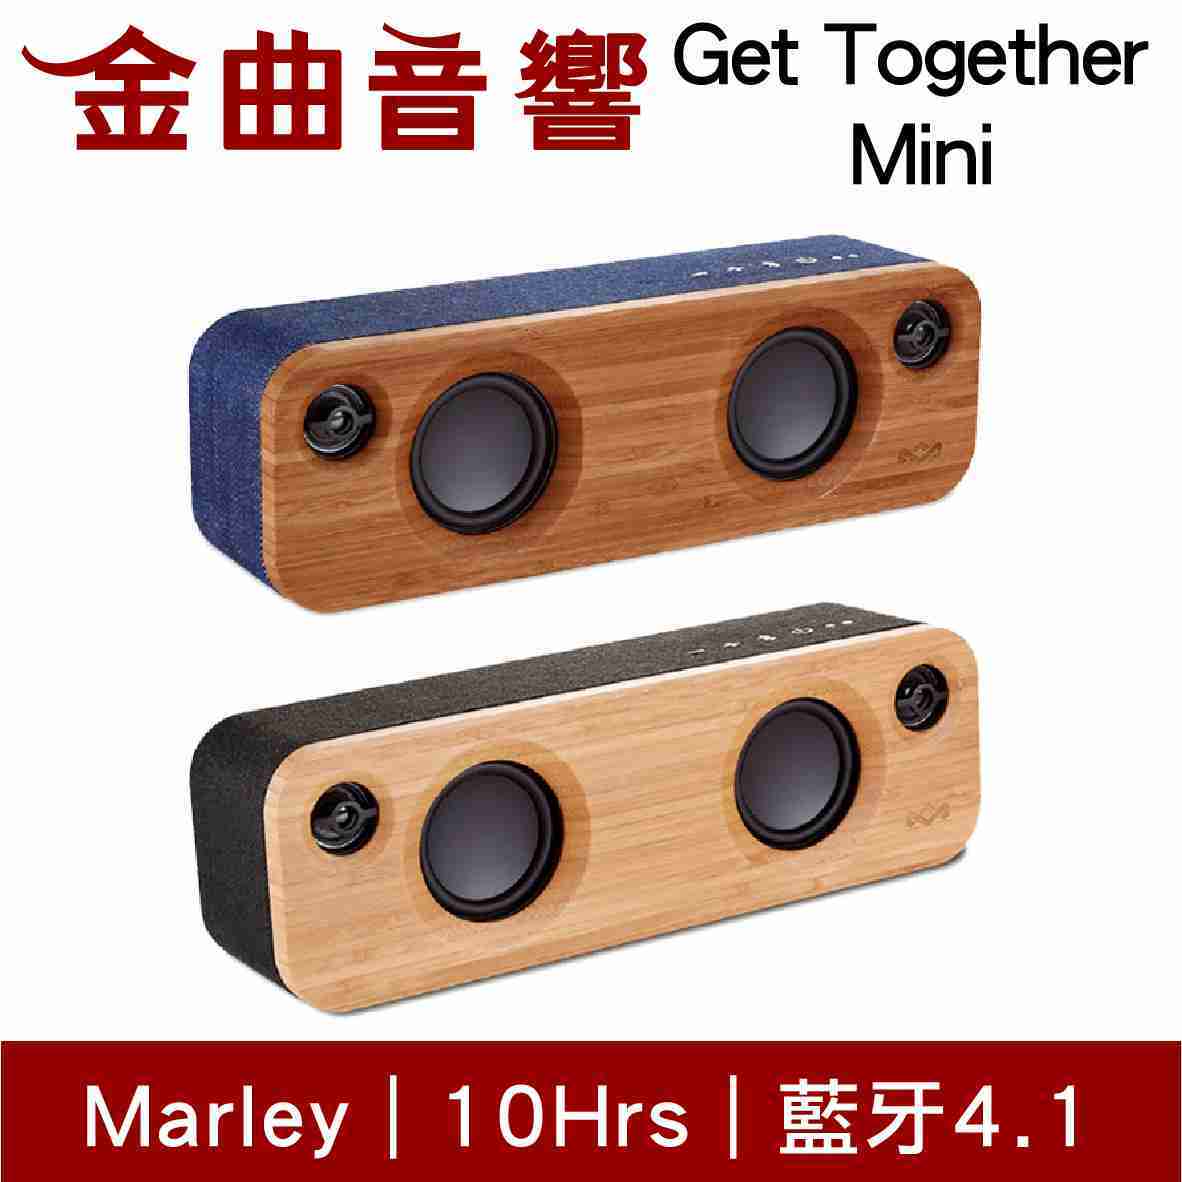 Marley Get Together Mini 三款可選 藍牙喇叭 經典木質喇叭 高清完美音質 |